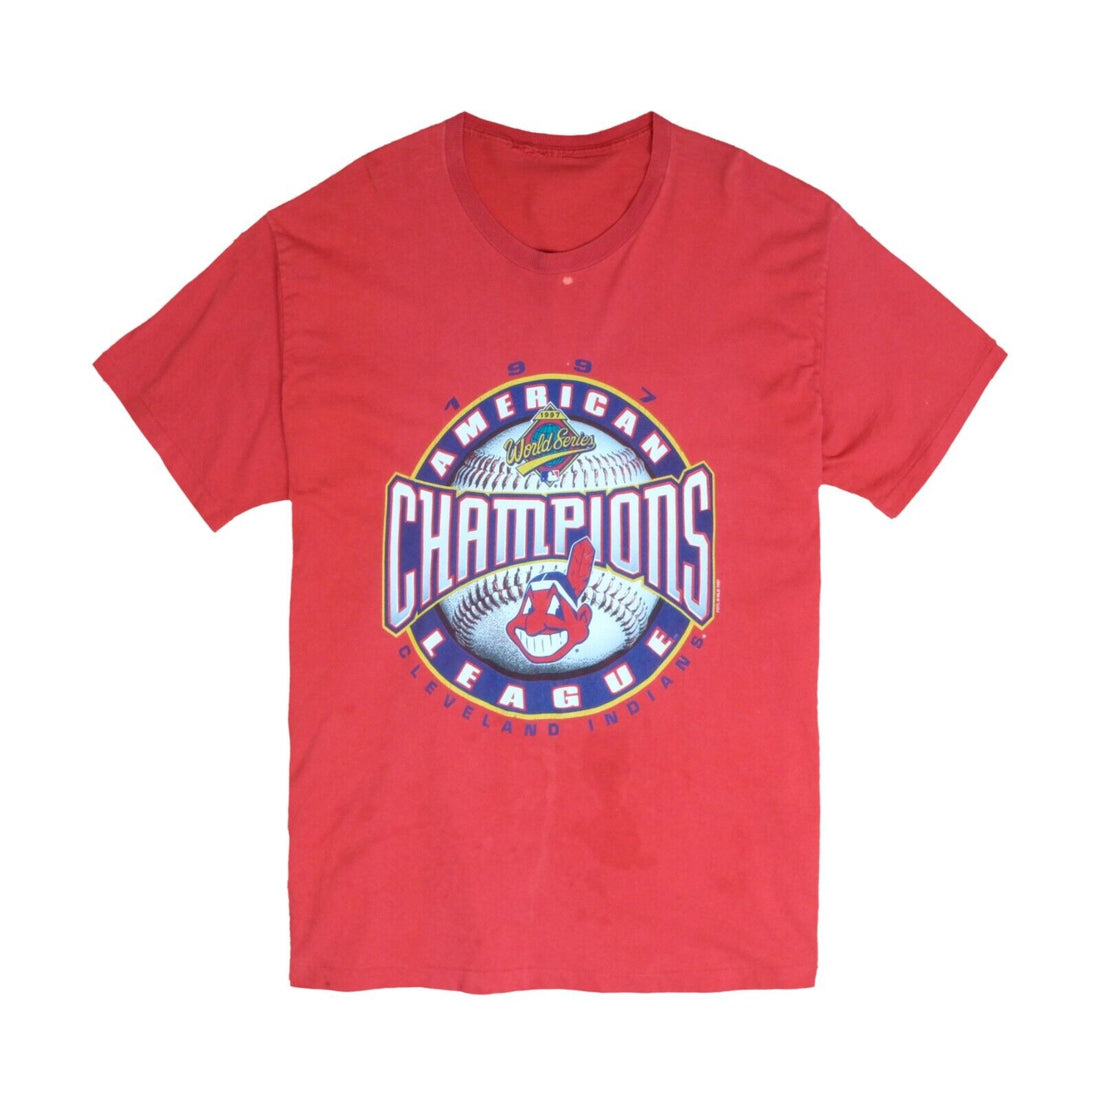 Vintage Cleveland Indians shirt, MLB navy blue graphic tee - AU L